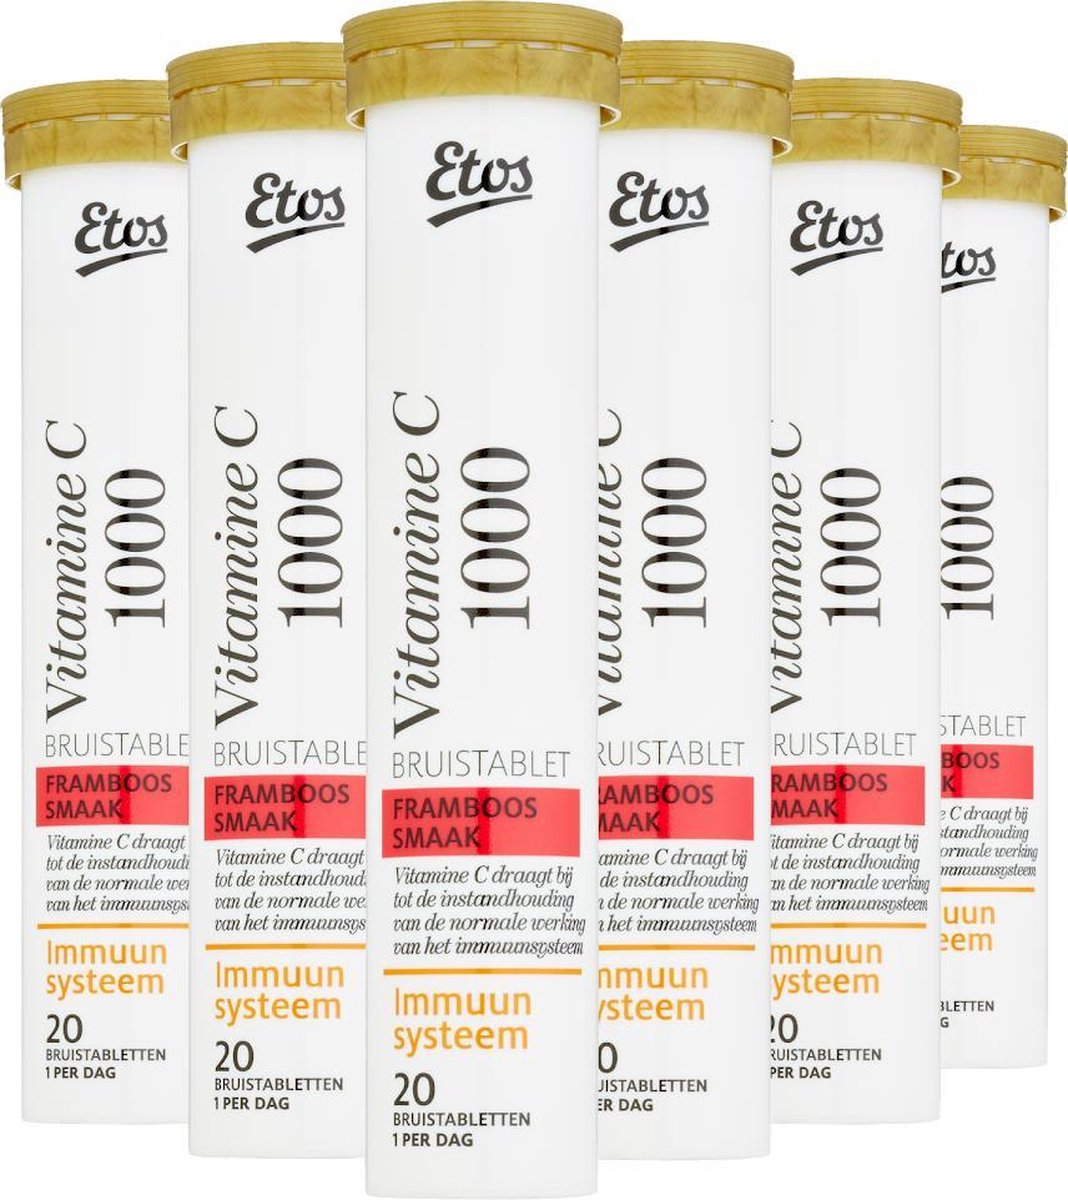 Etos Vitamine C - Bruistablet - Framboos - 120 stuks (6x20)